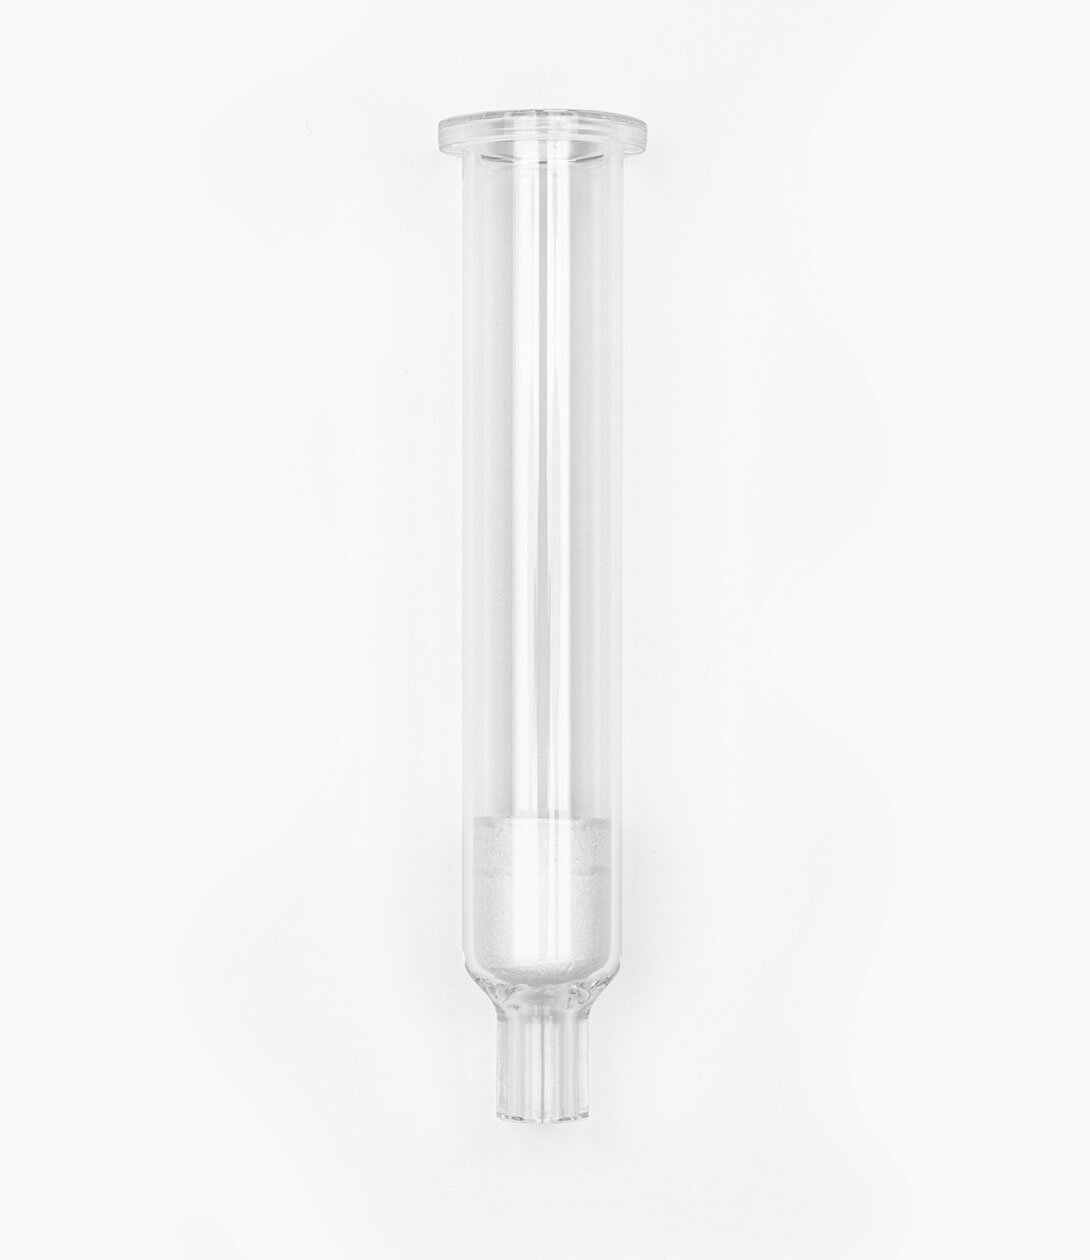 Elufix glass column 1 g Florisil & 1 g anhydrous sodium sulphate | © LCTech GmbH